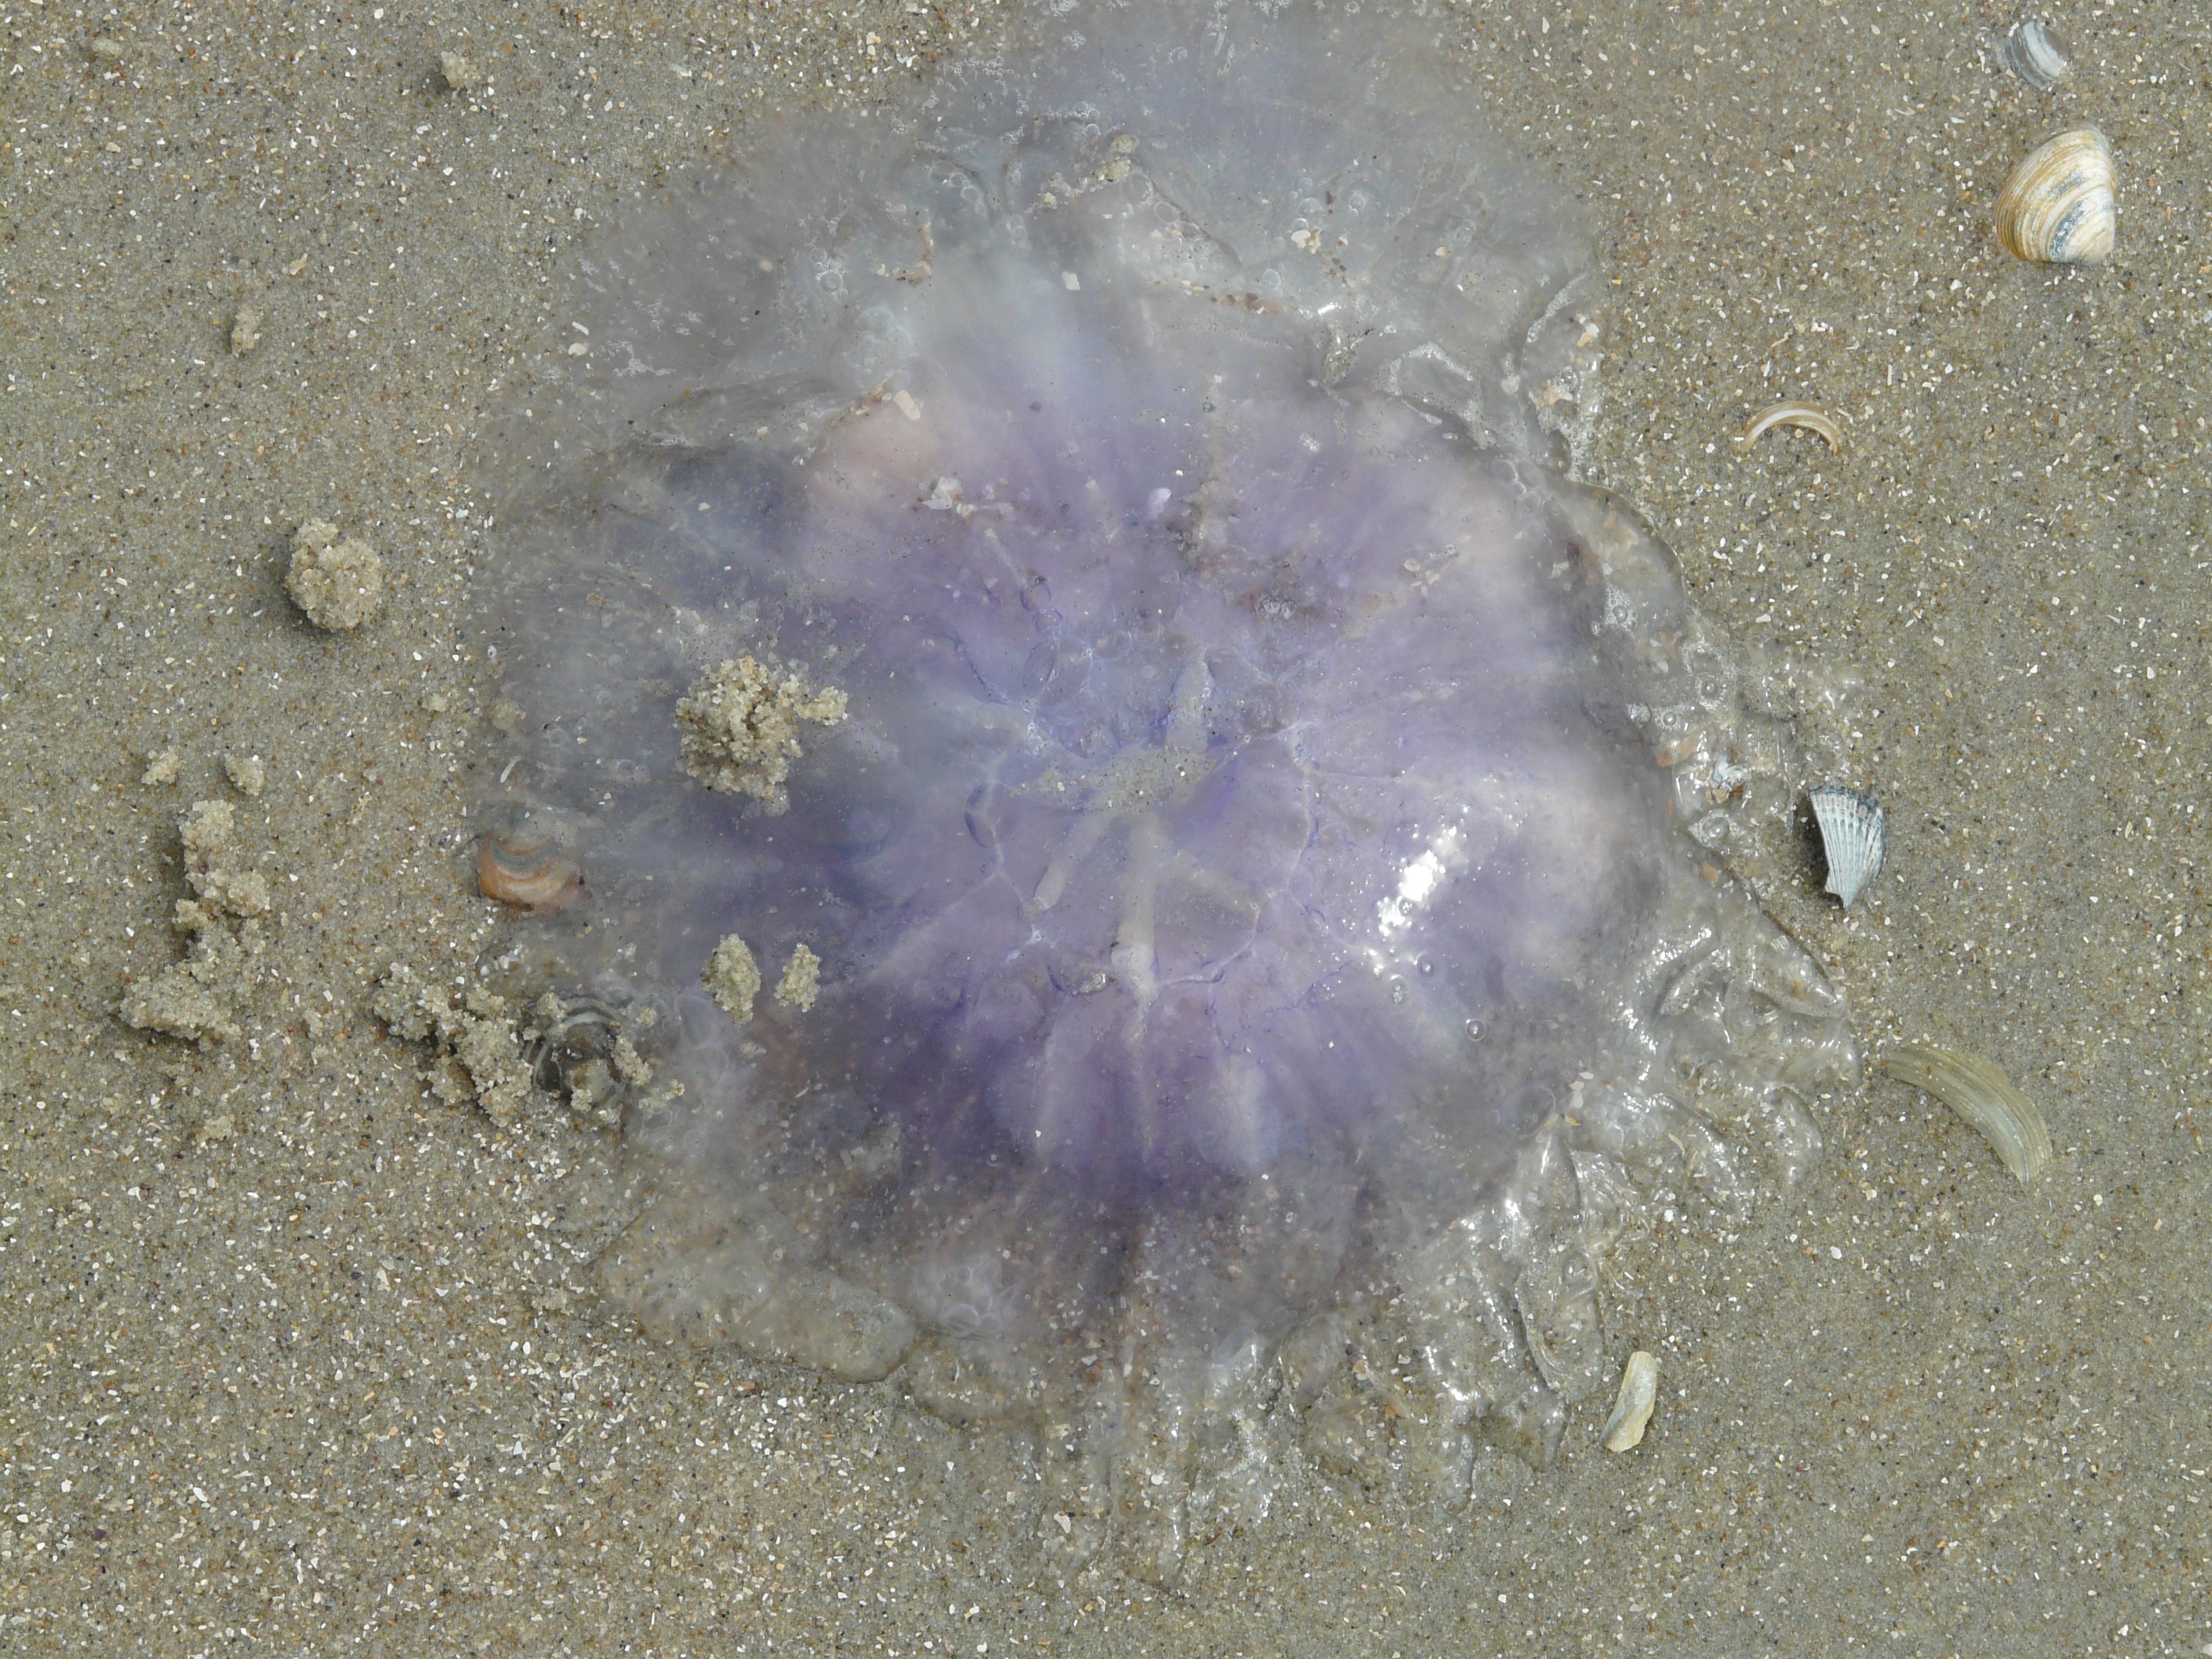 purple jellyfish